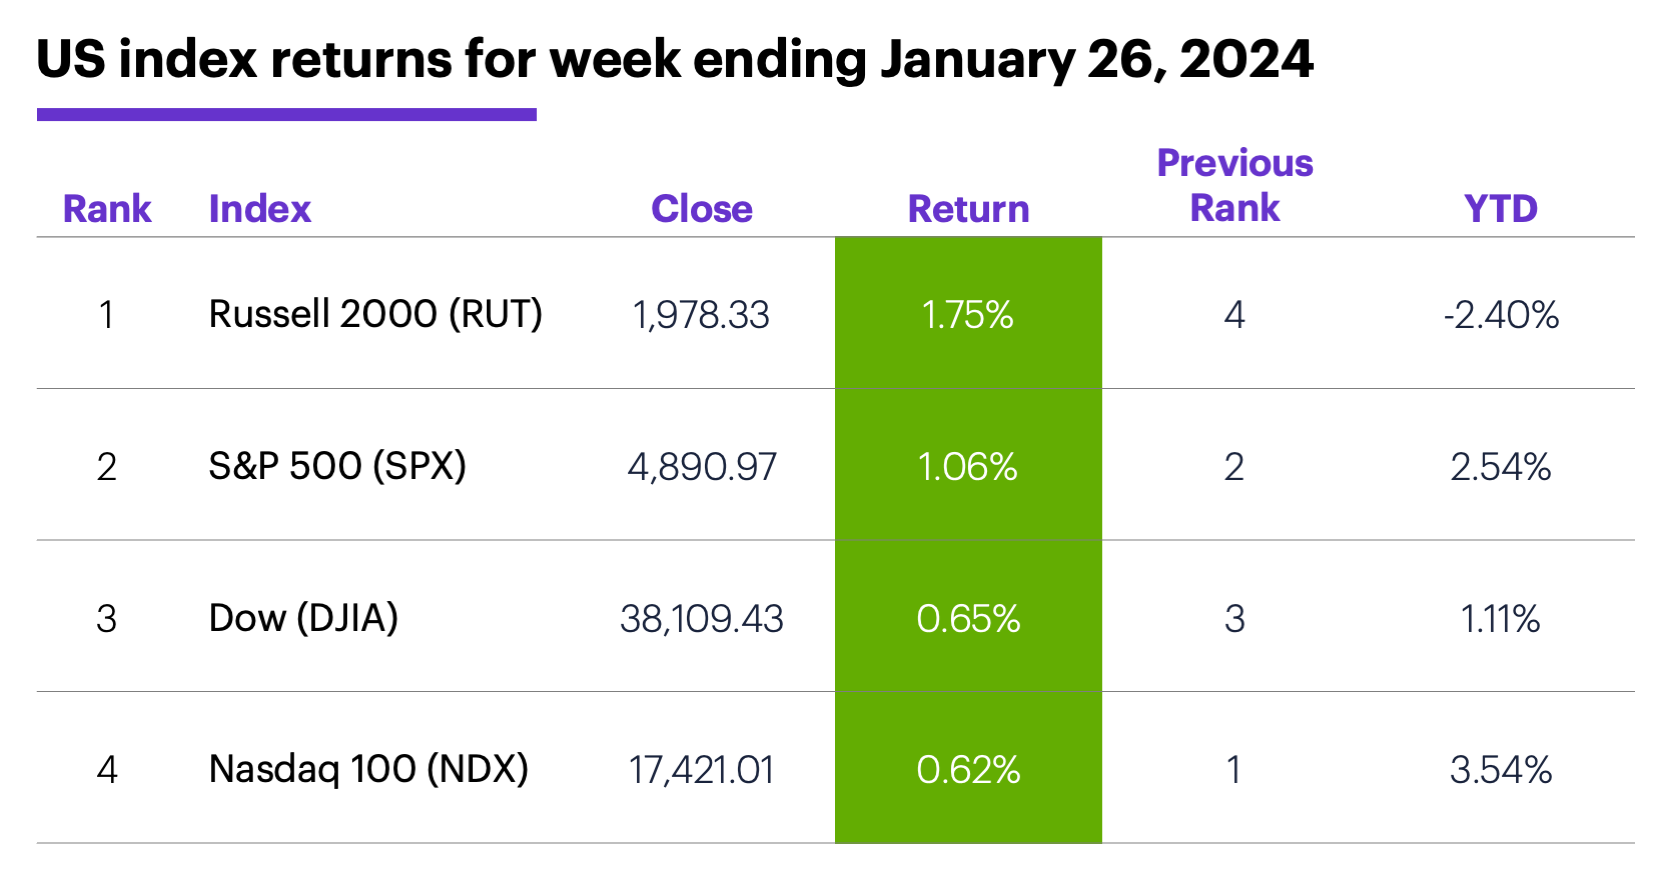 US stock index performance for week ending 1/26/24. S&P 500 (SPX), Nasdaq 100 (NDX), Russell 2000 (RUT), Dow Jones Industrial Average (DJIA).